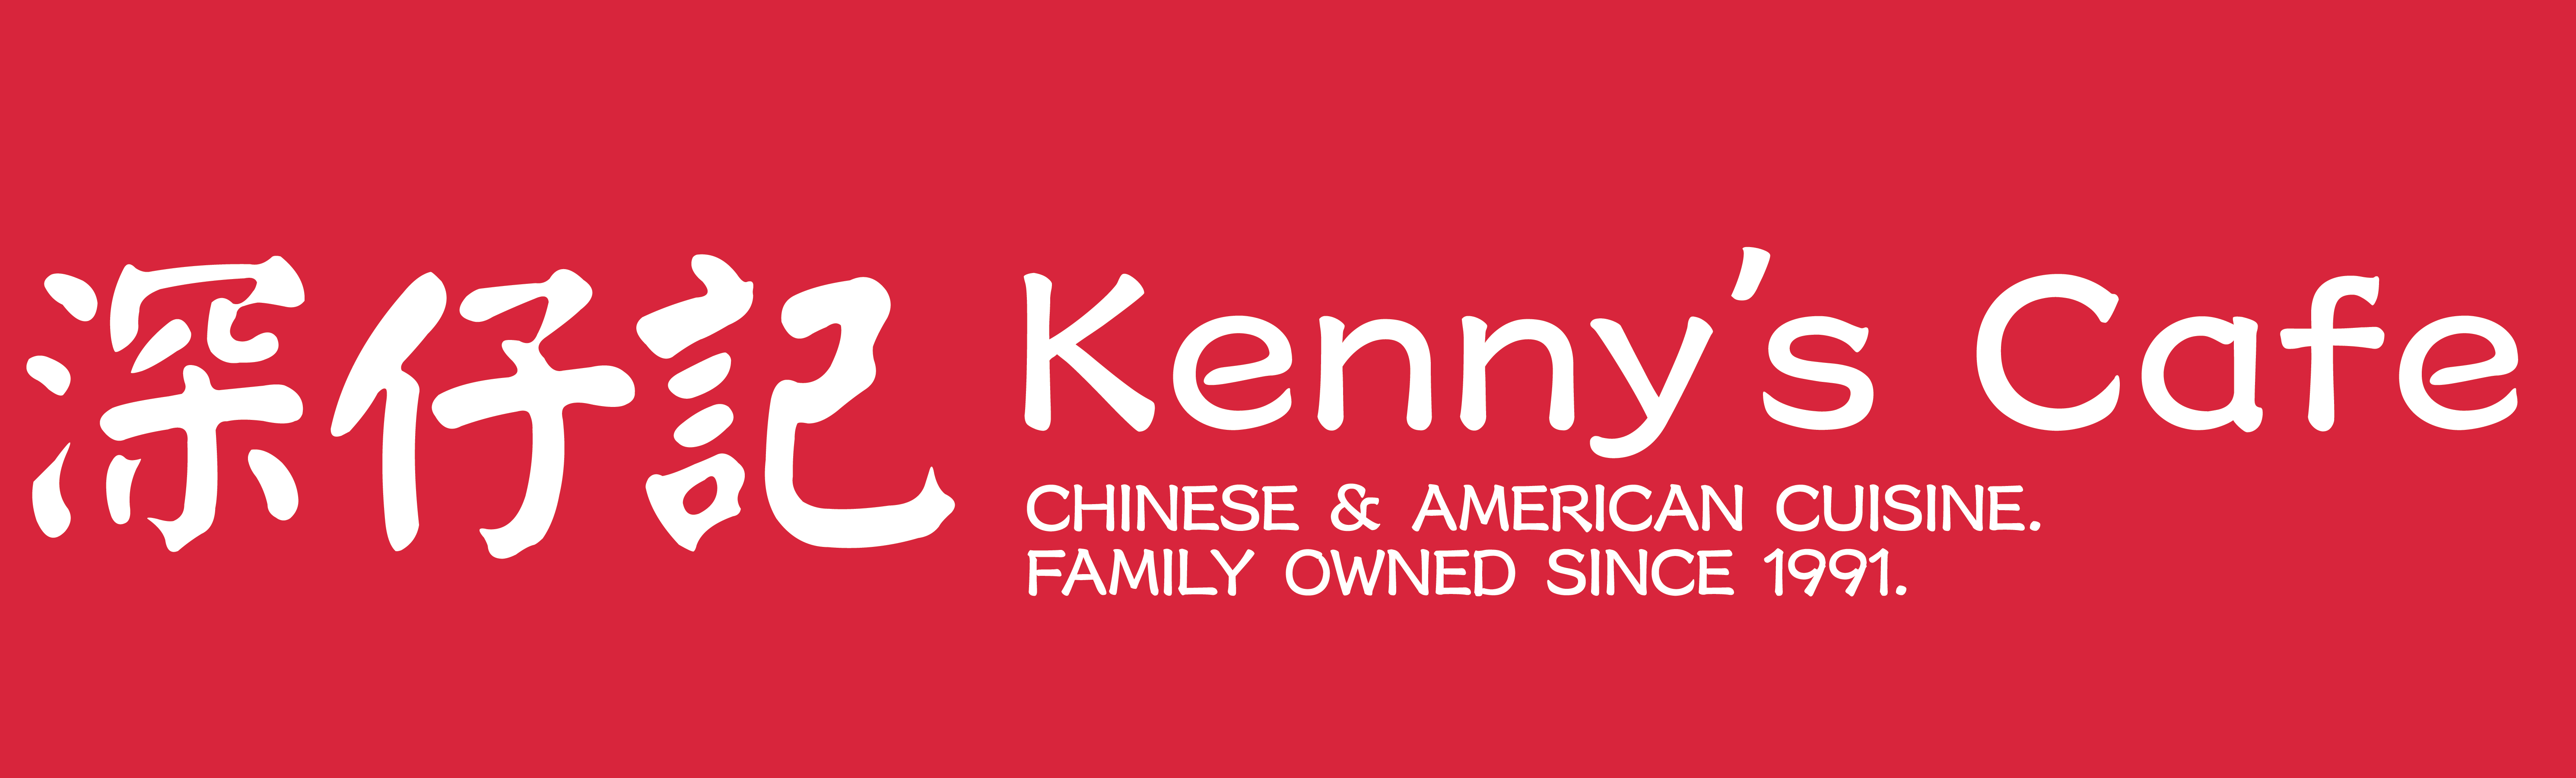 Kenny's Cafe logo